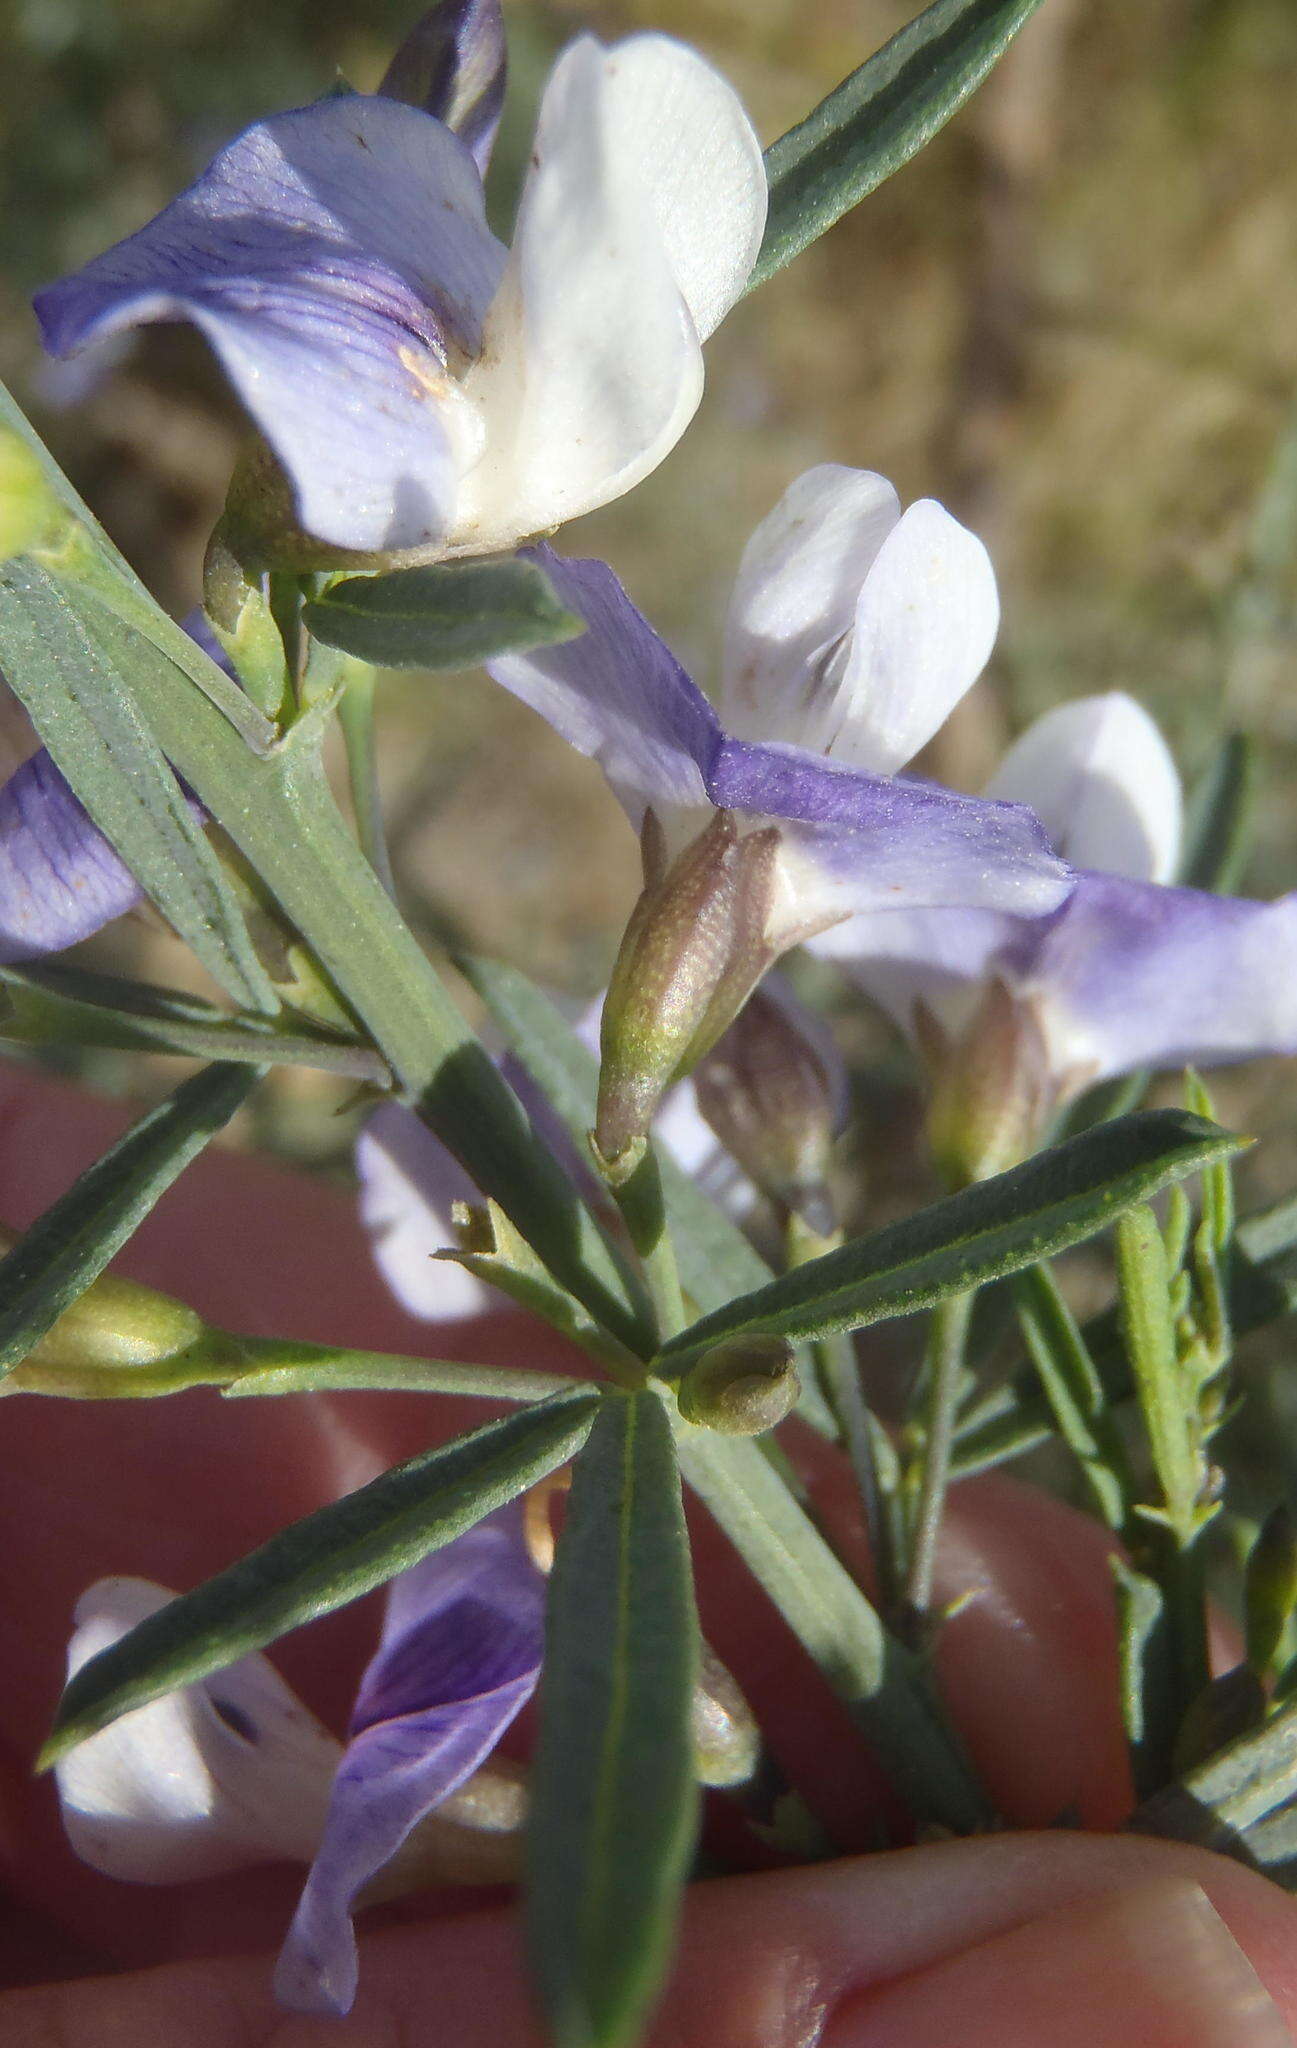 Image of Psoralea axillaris L. fil.